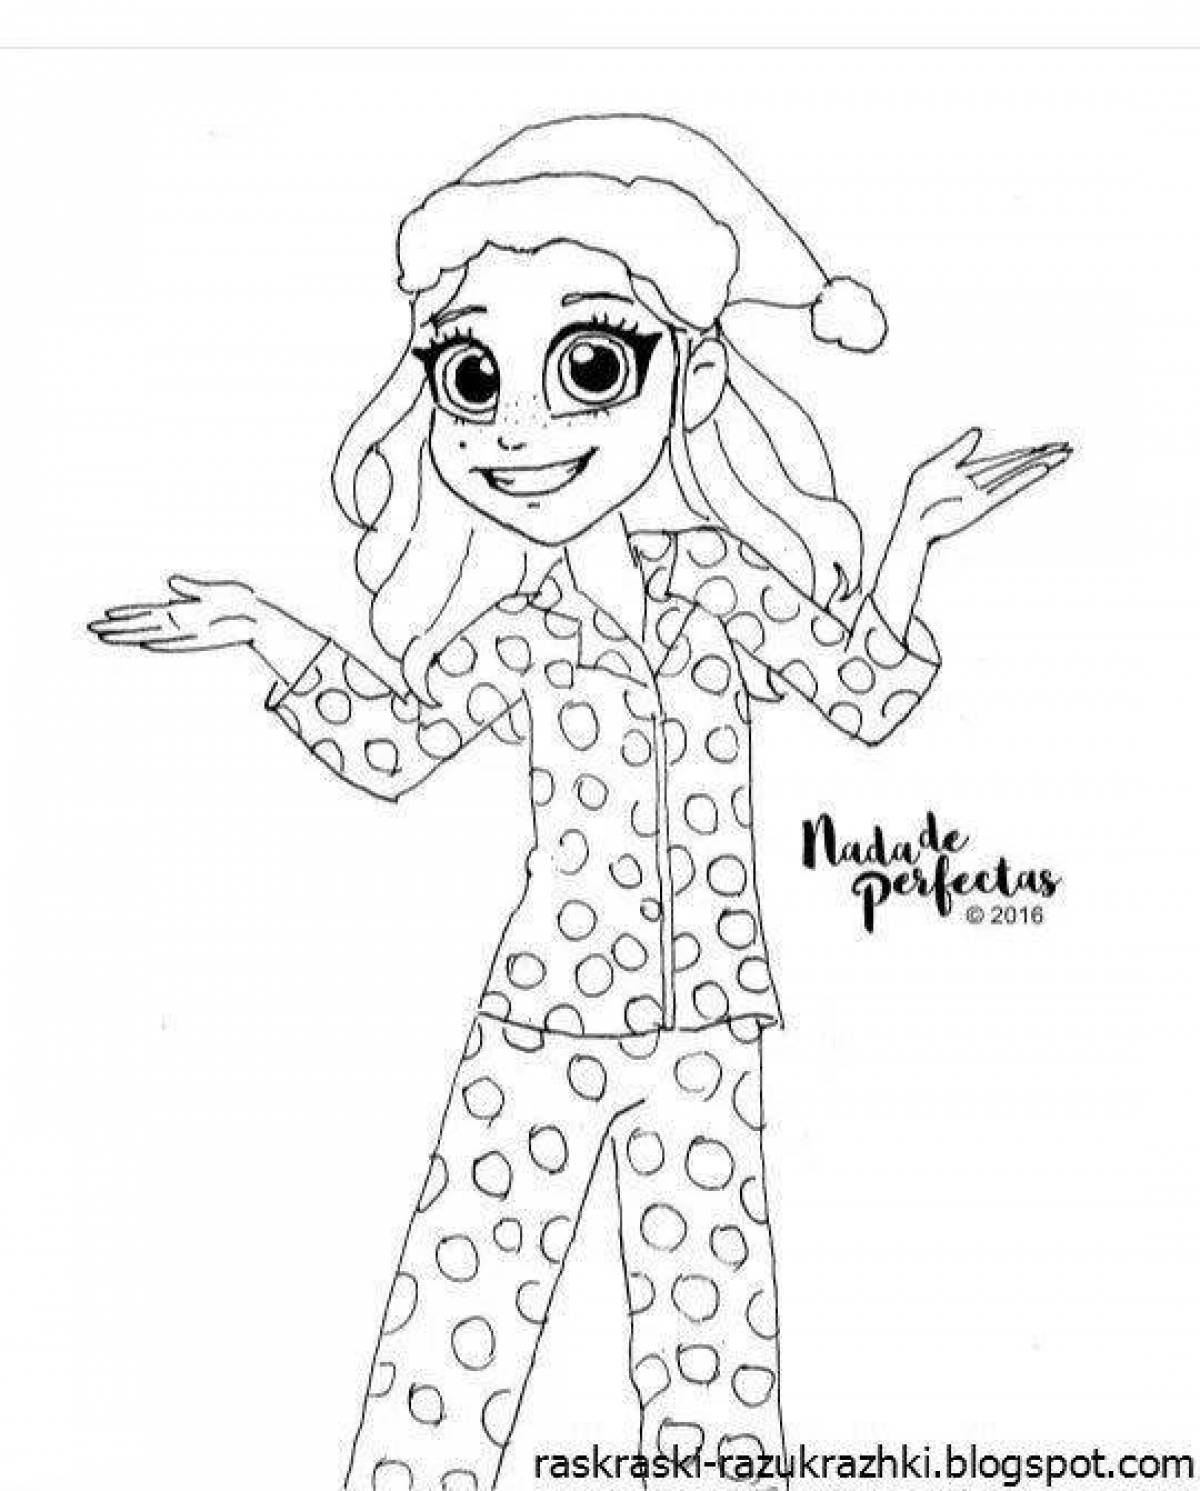 Raised coloring girl in pajamas